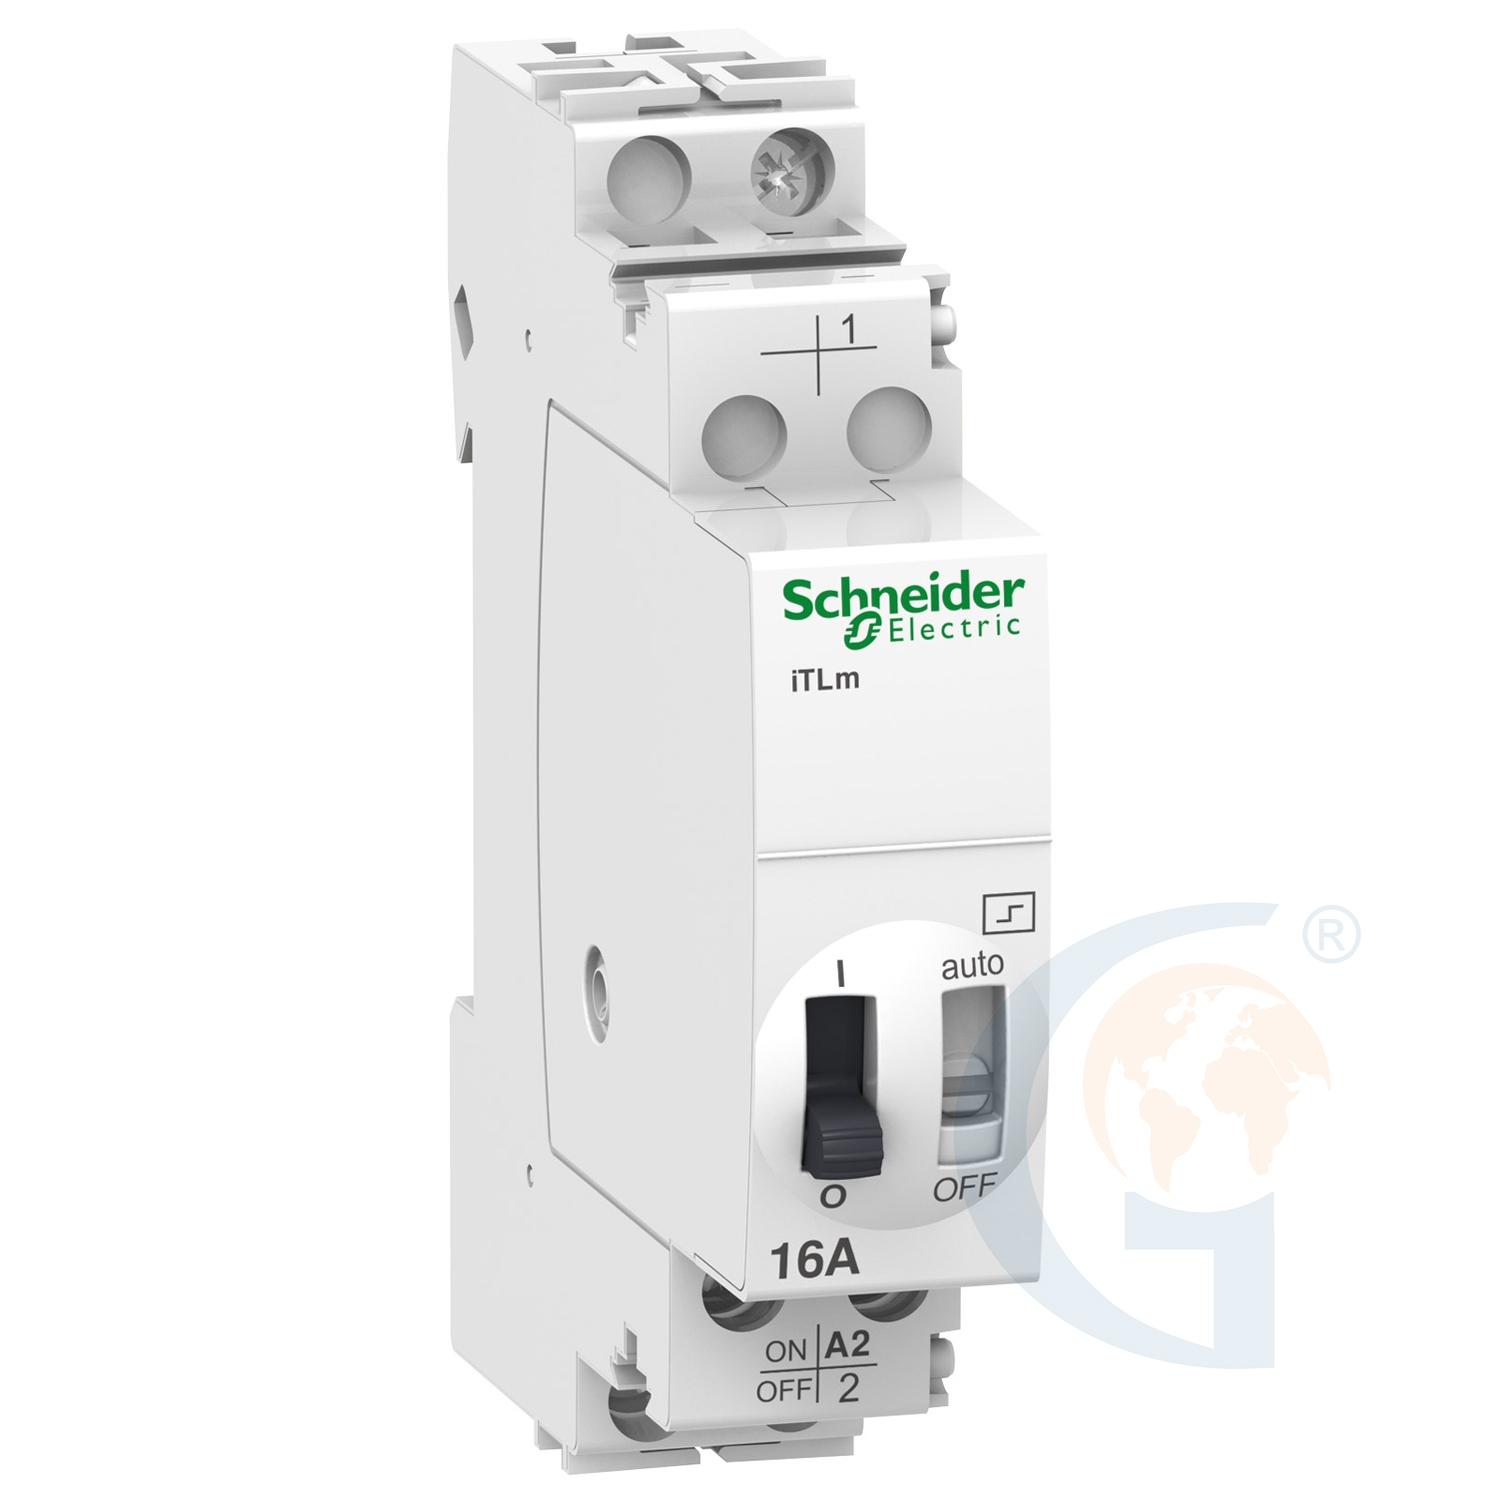 Schneider Electric A9C34811 IMPULSE RELAY ITLM – 1P – 1NO – 16A – COIL 230…240 VAC 50/60HZ https://gesrepair.com/wp-content/uploads/2020/Schneider/Schneider_Electric_A9C34811_.jpg